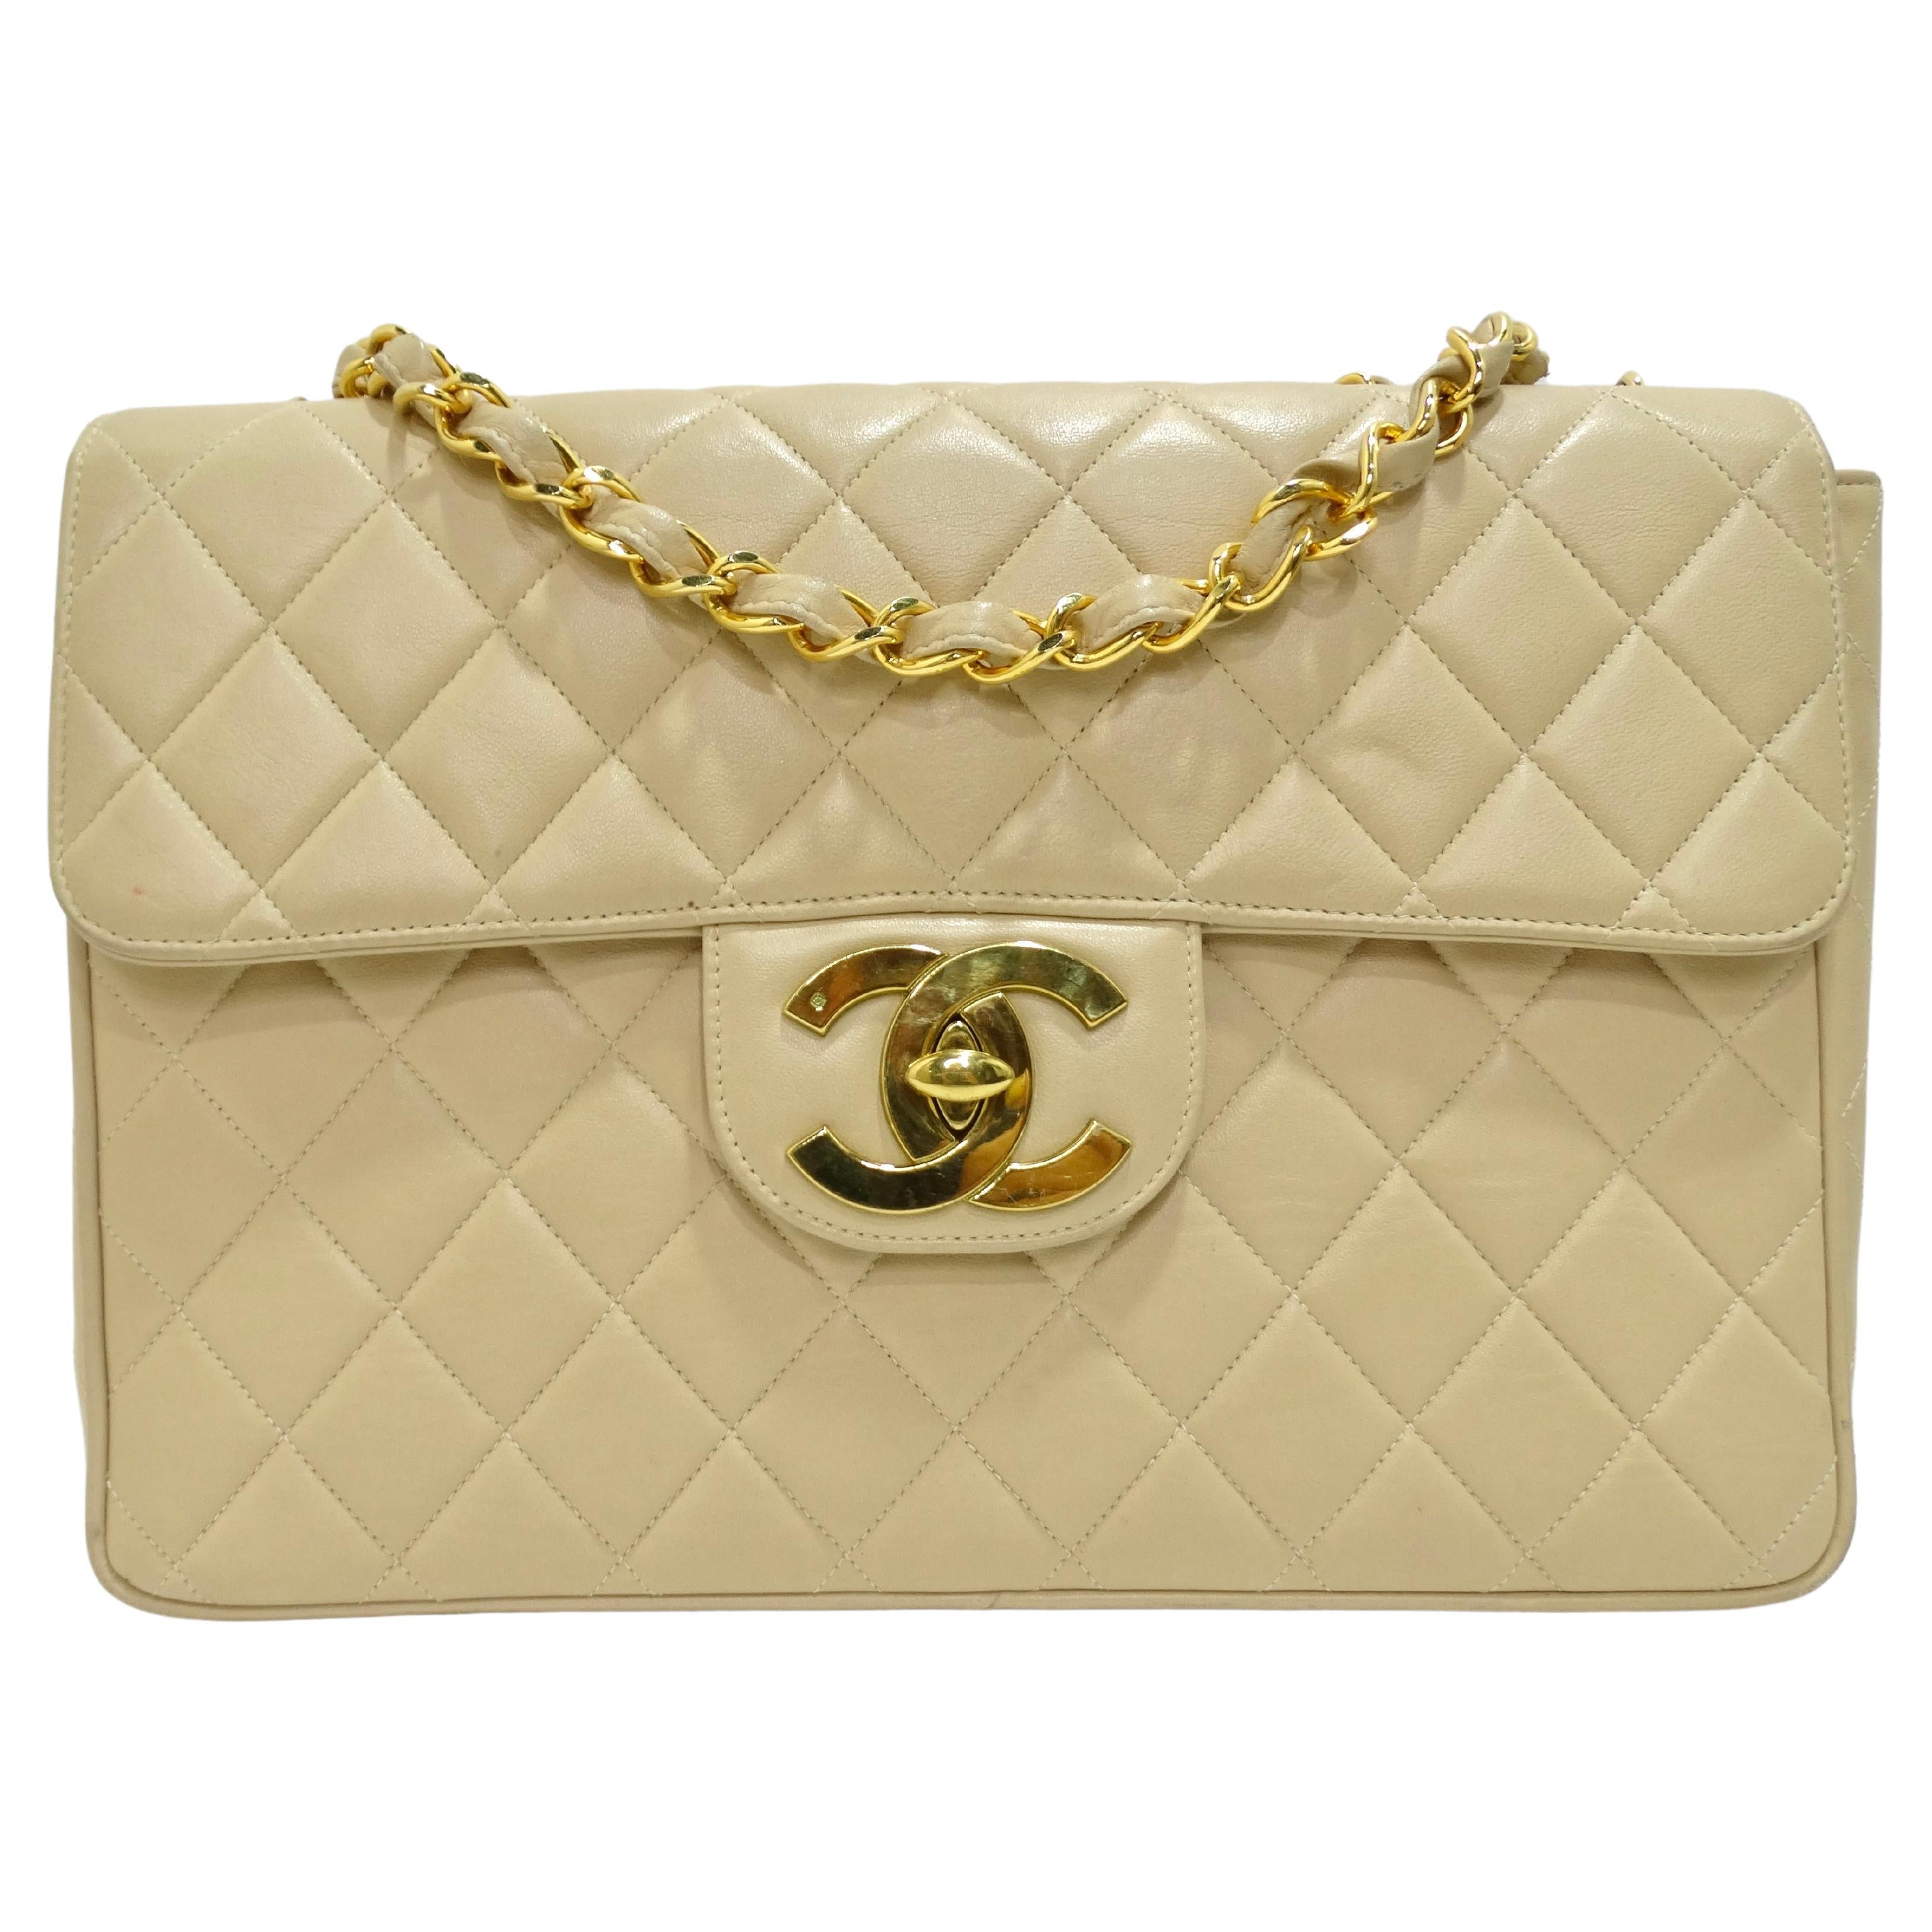 Chanel Beige Quilted Lambskin Single-Flap Jumbo Handbag